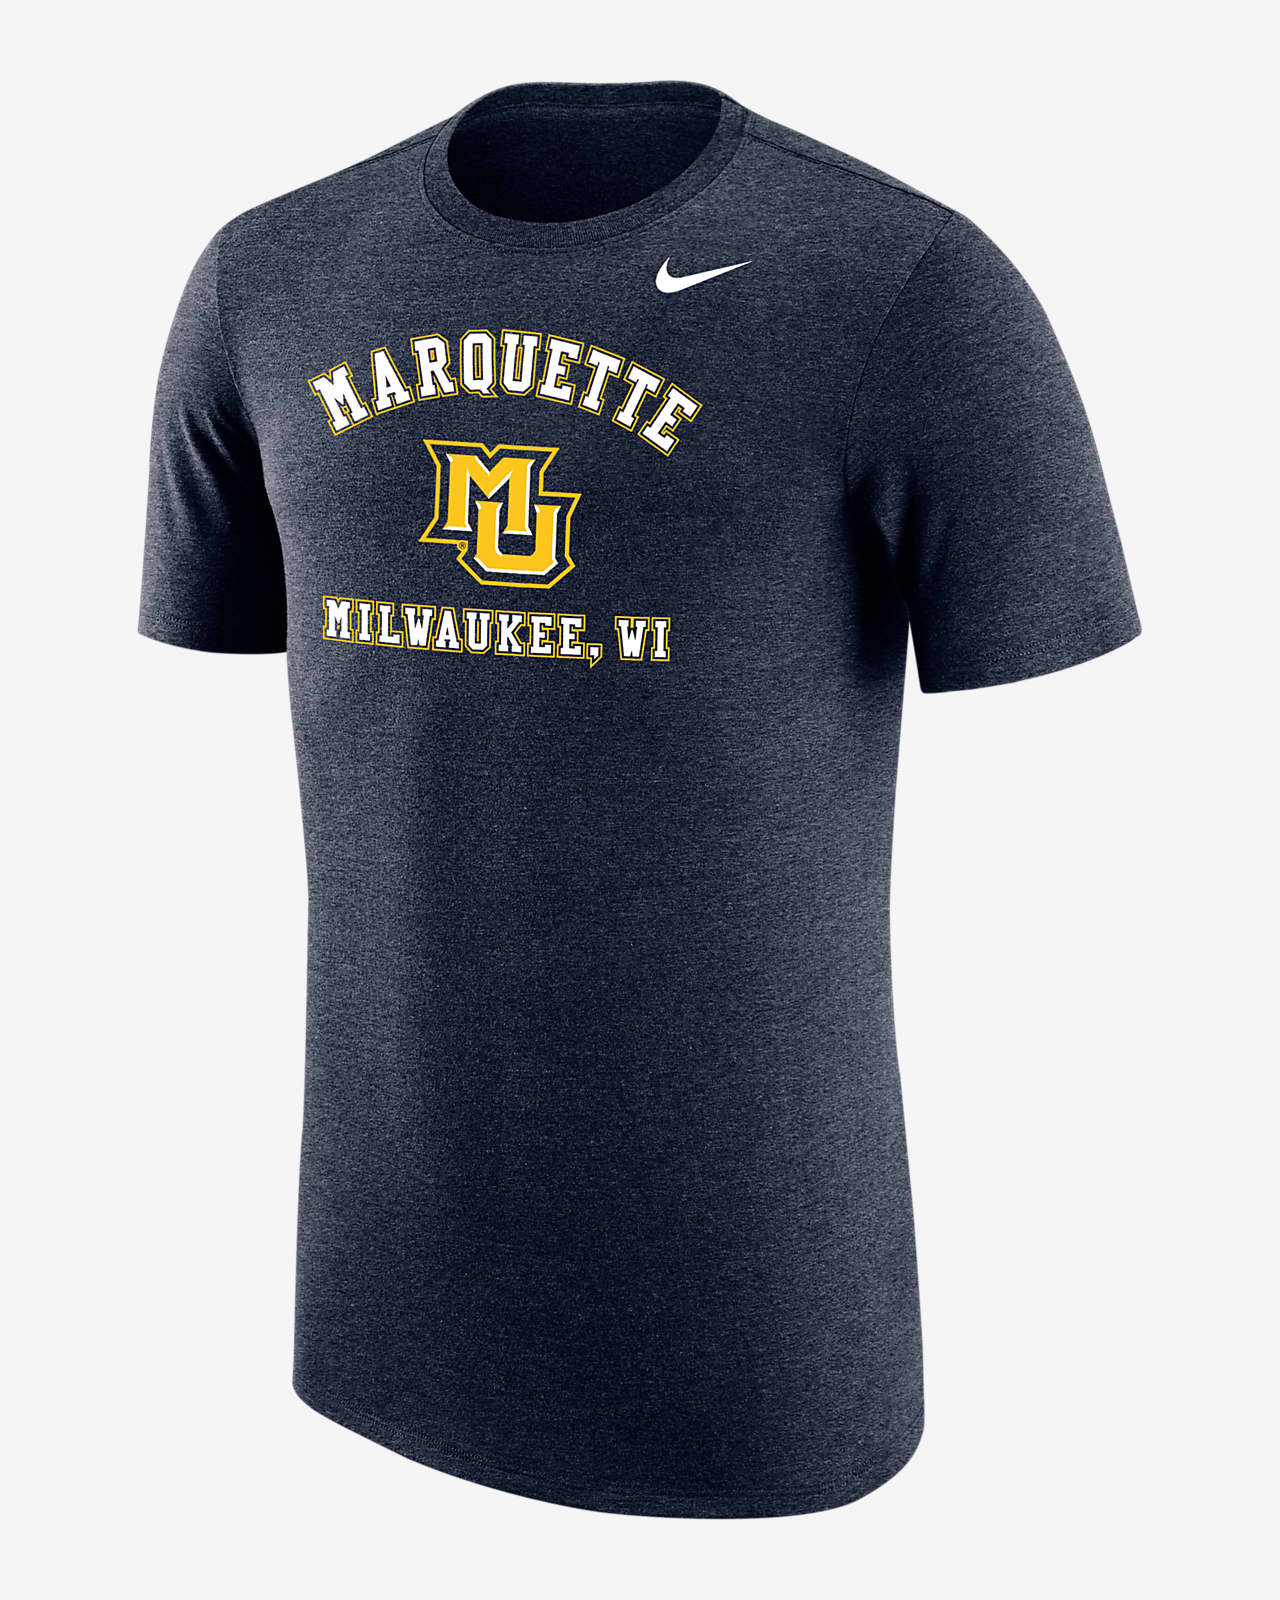 Marquette Men's Nike College T-Shirt